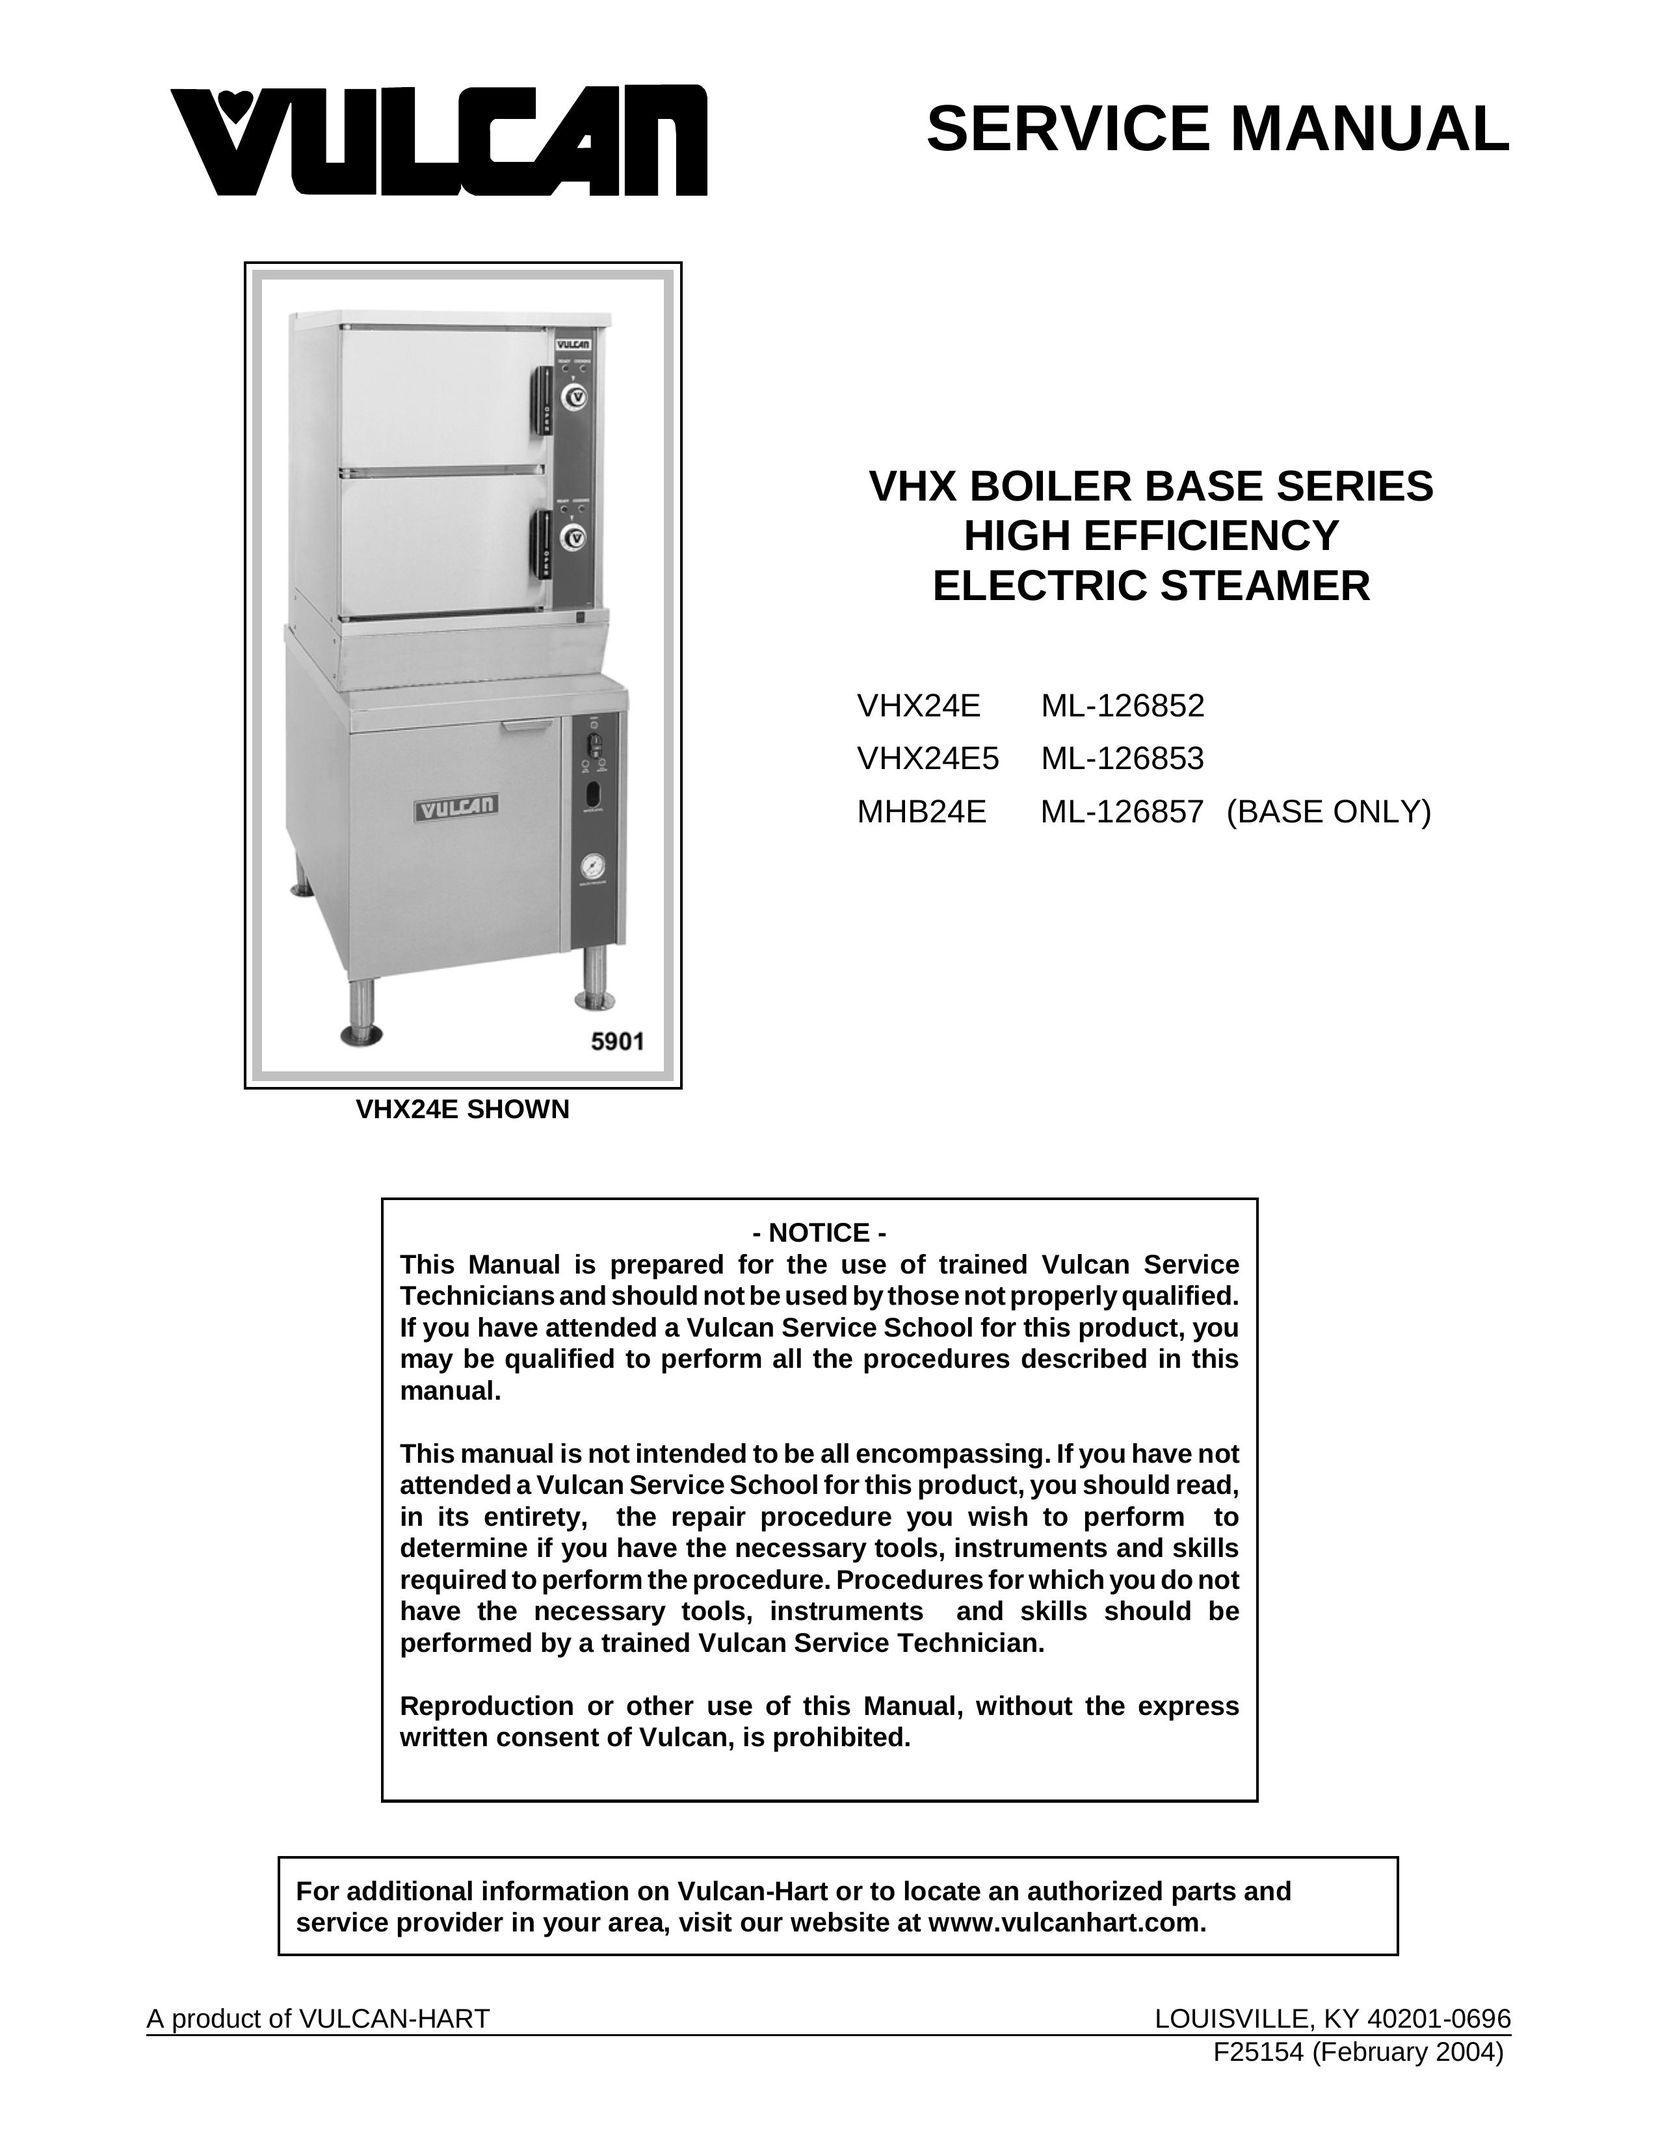 Vulcan-Hart MHB24E Electric Steamer User Manual